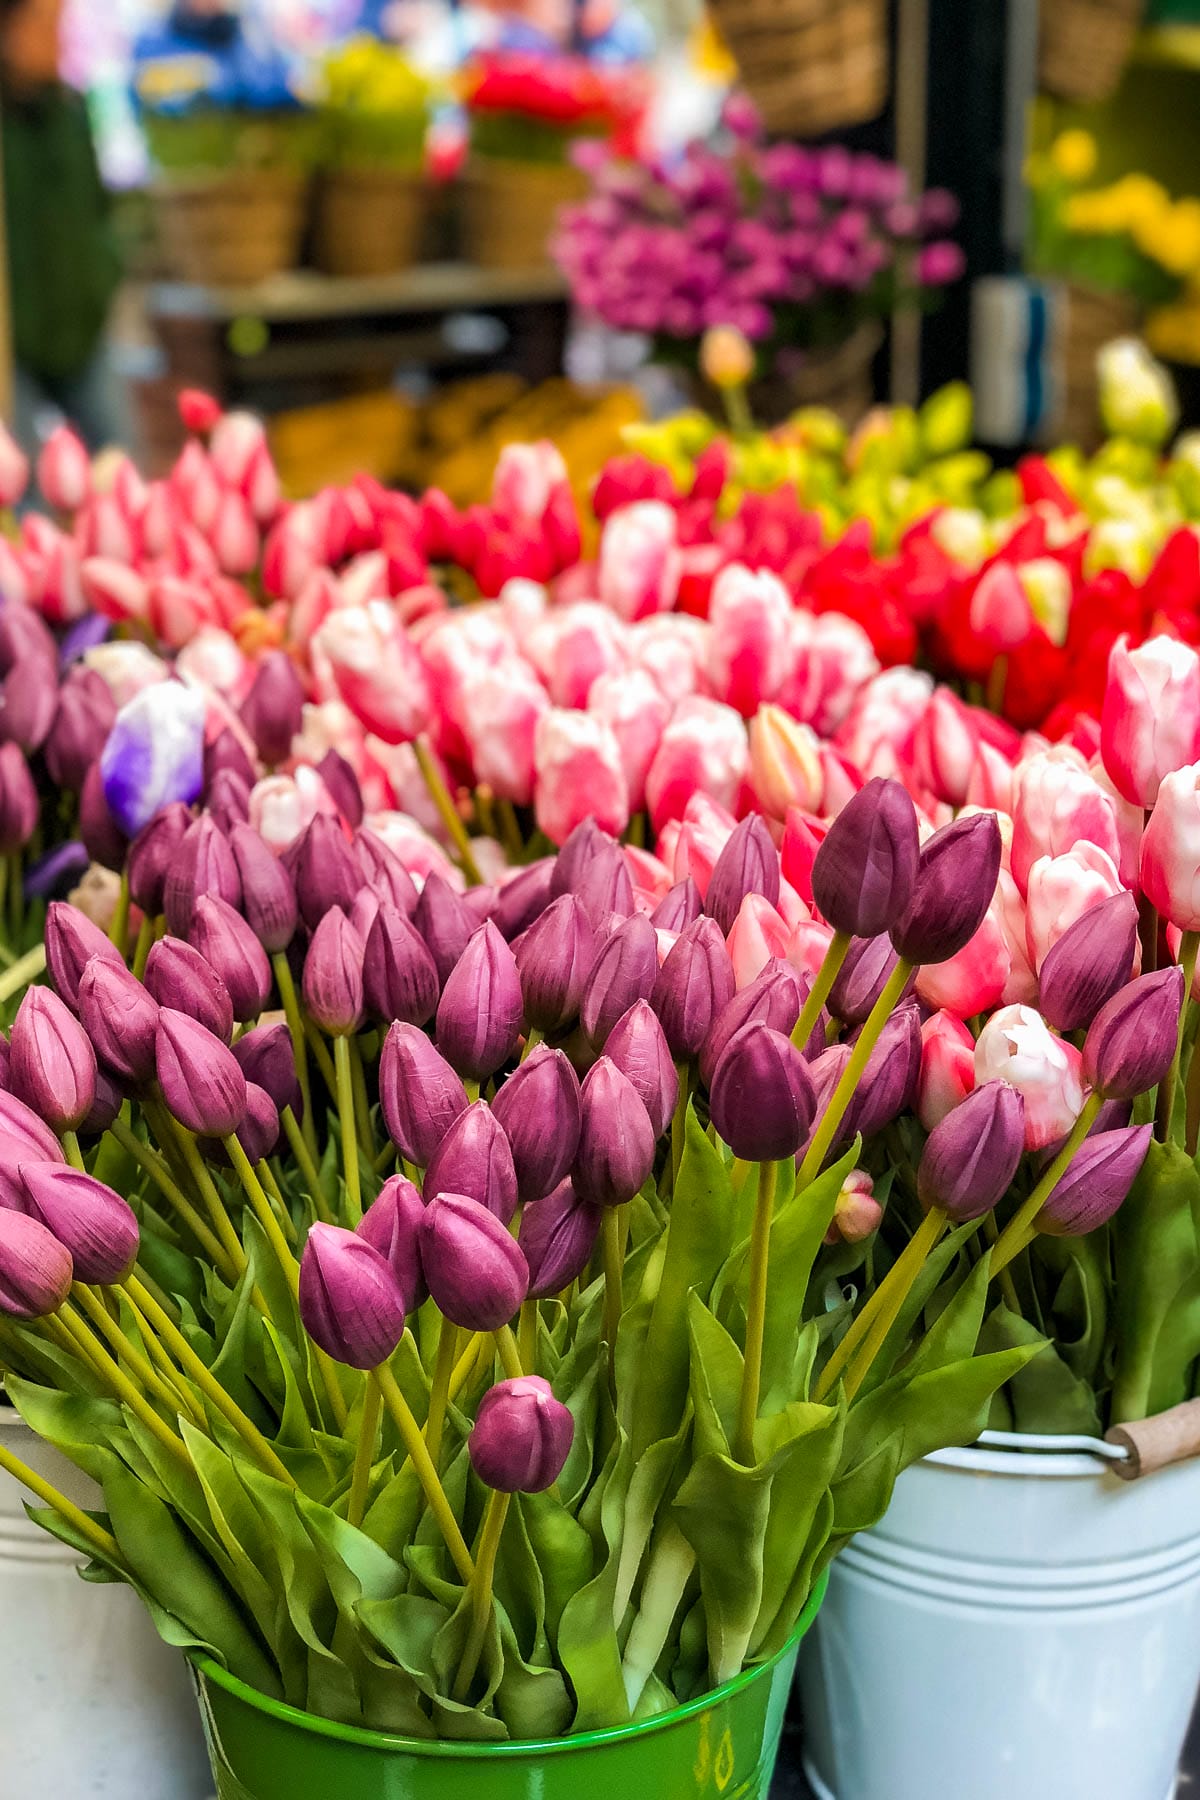 Tulips at Bloemenmarkt Amsterdam